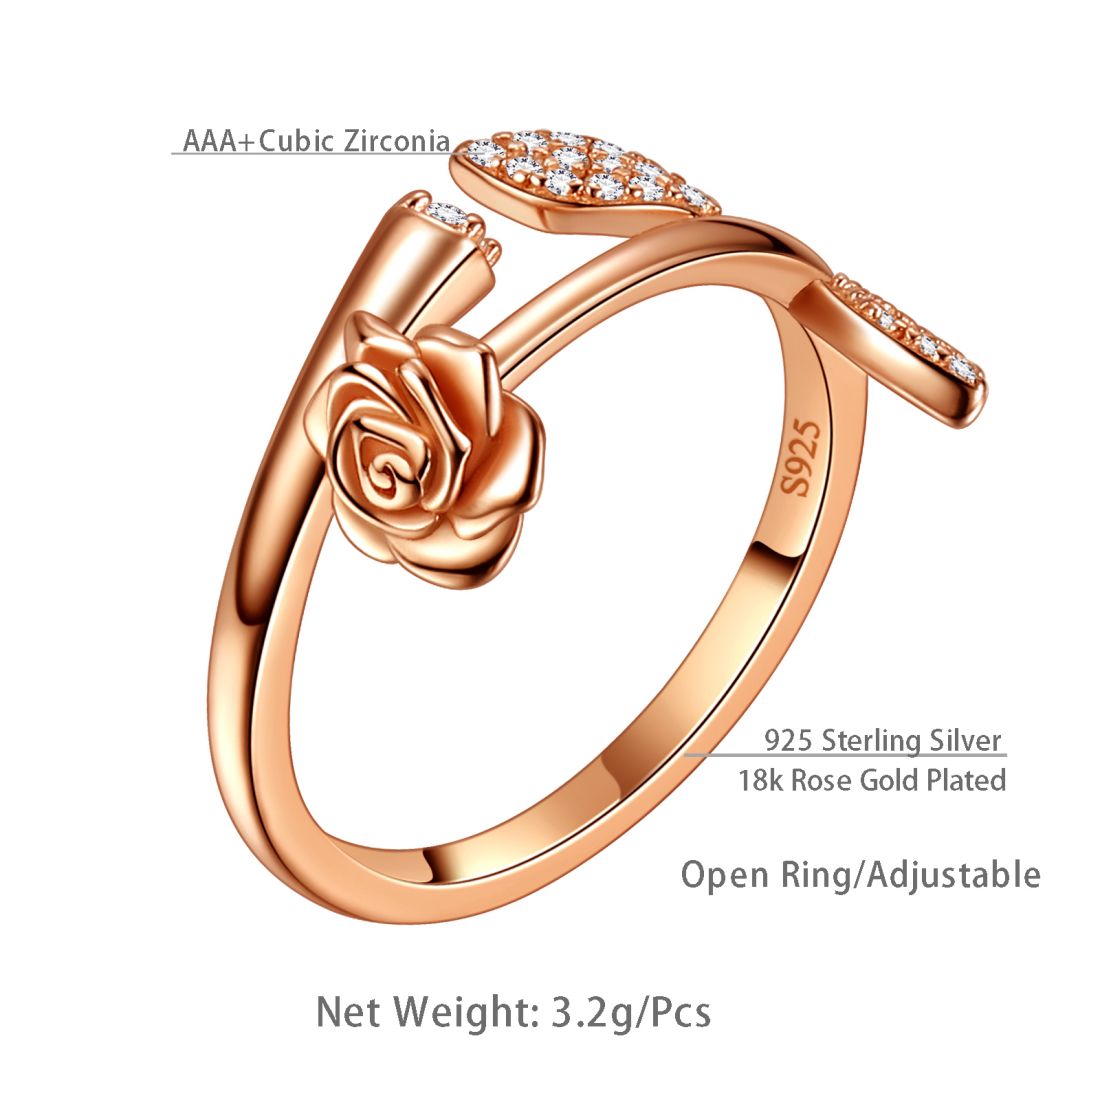 Rose Flower Ring 925 Sterling Silver Aurora Tears - Rings - Aurora Tears Jewelry